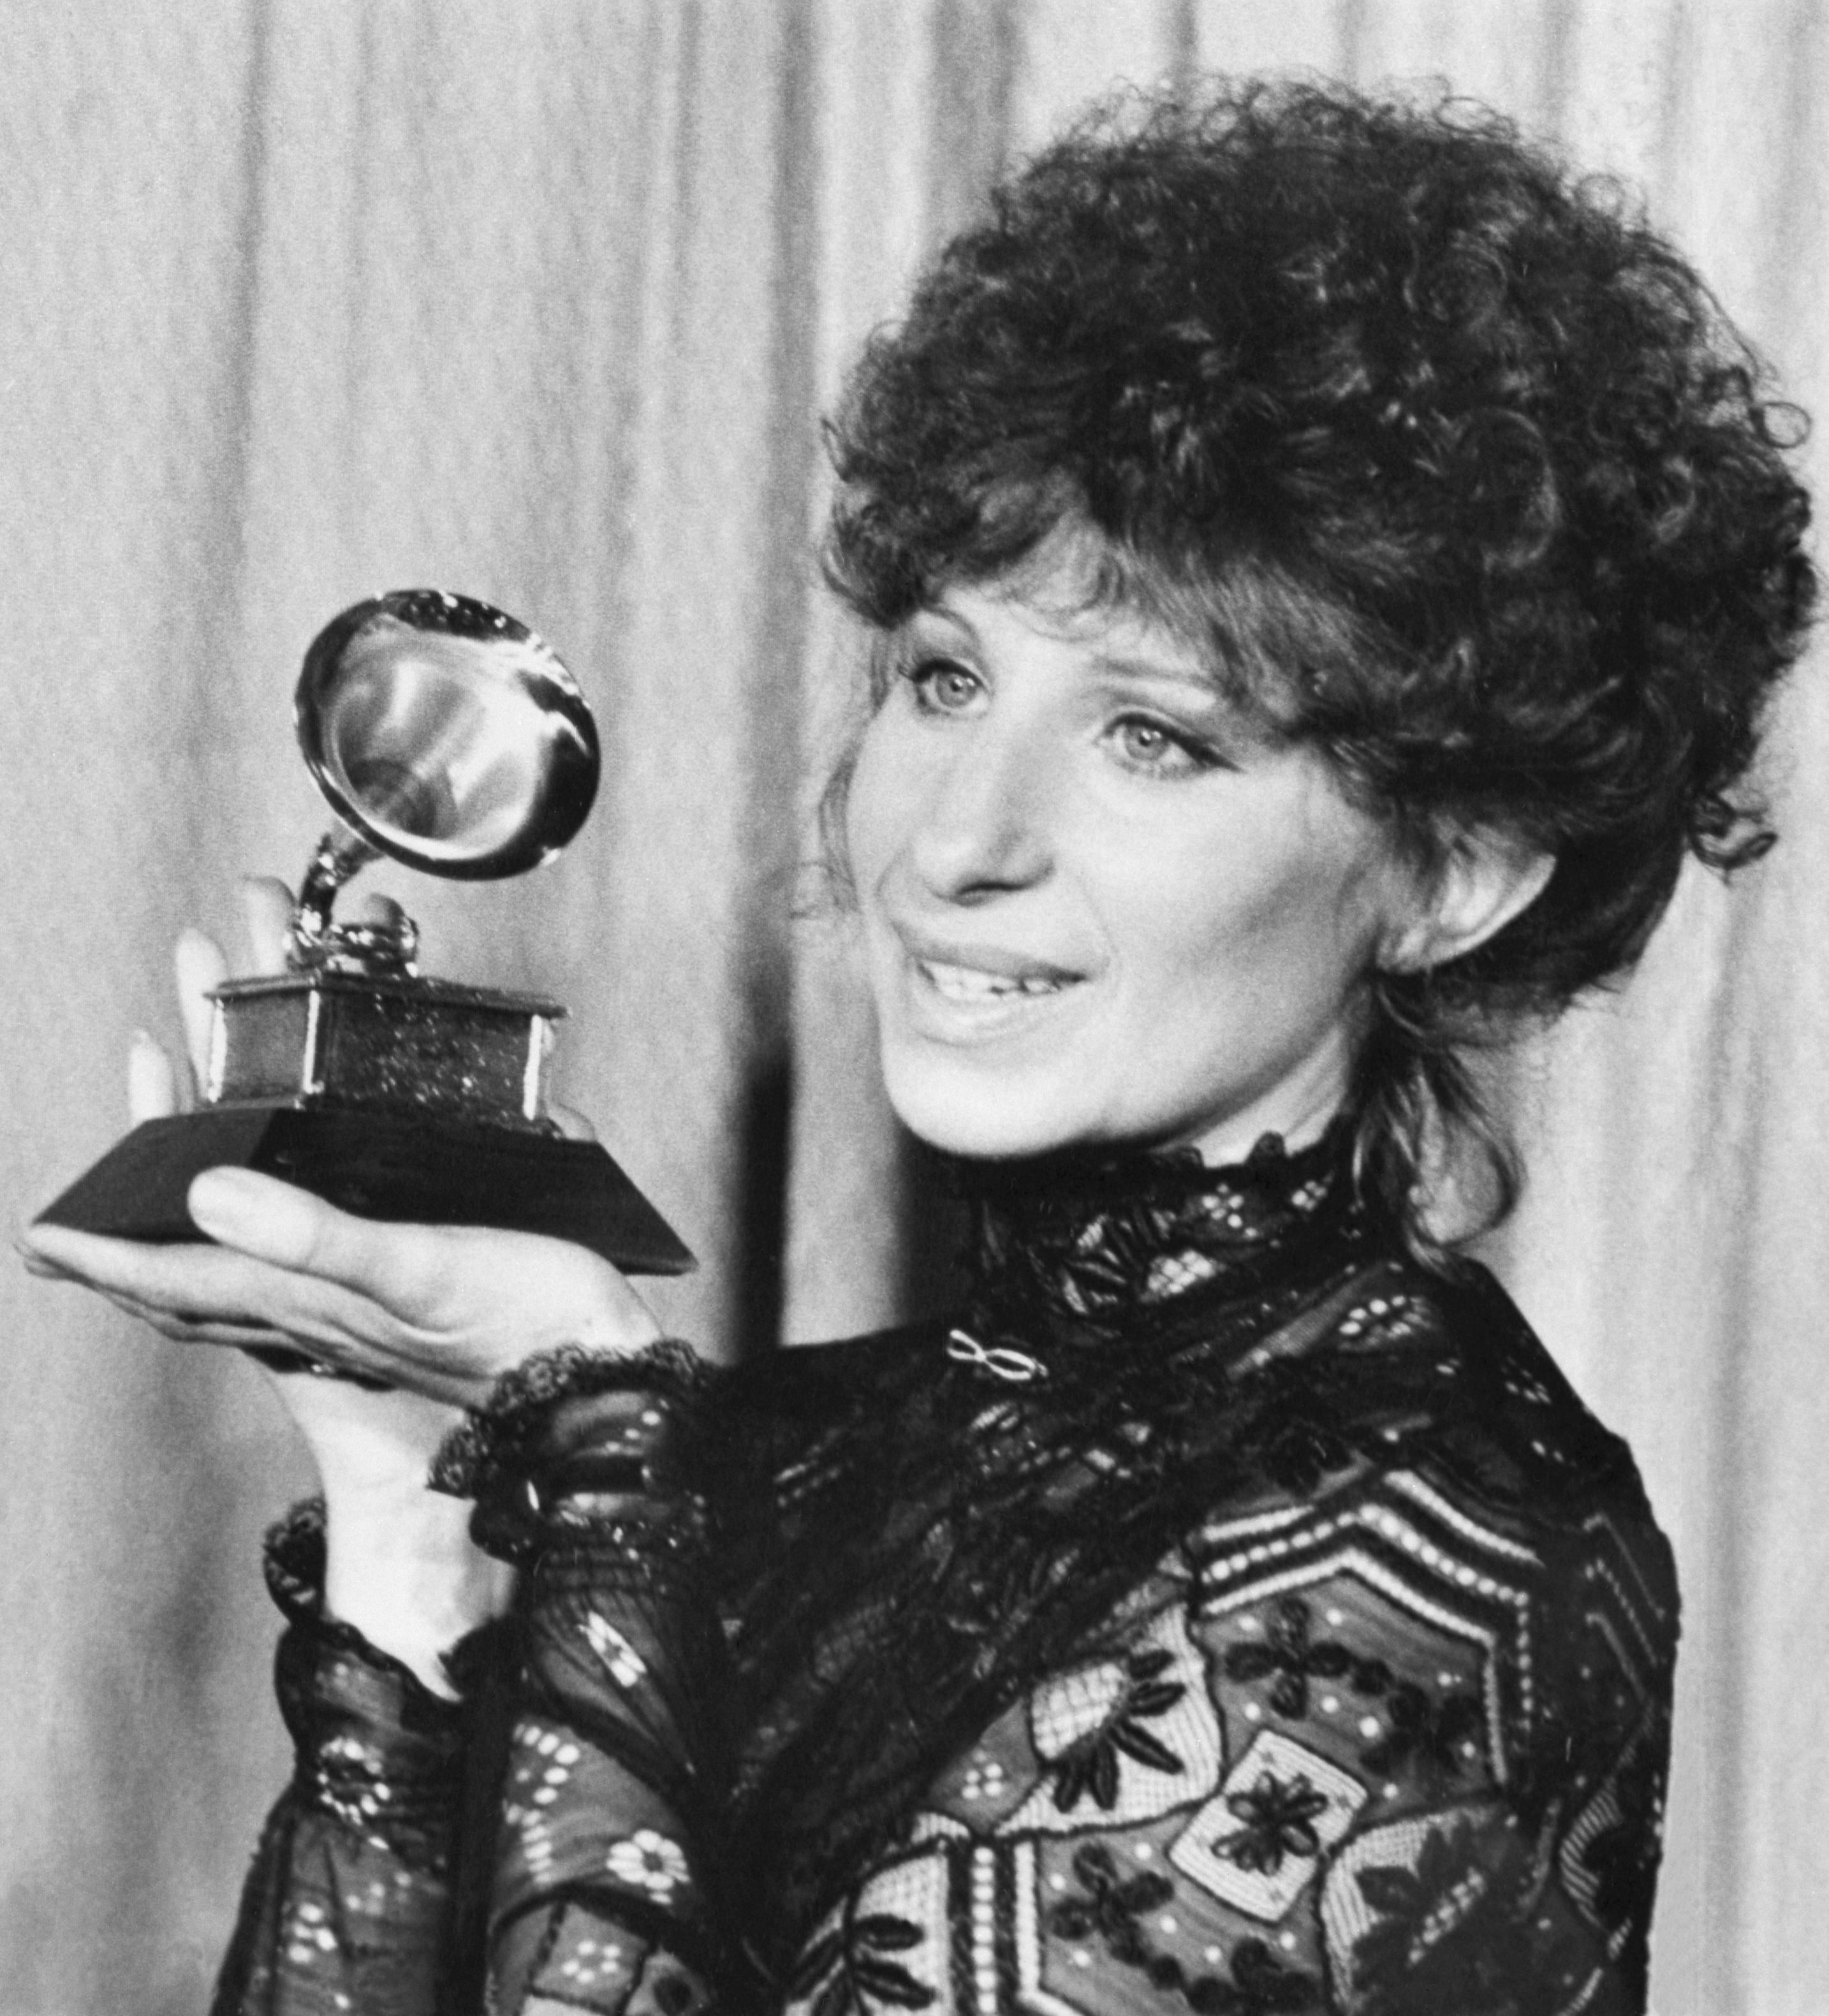 Barbra holding a Grammy